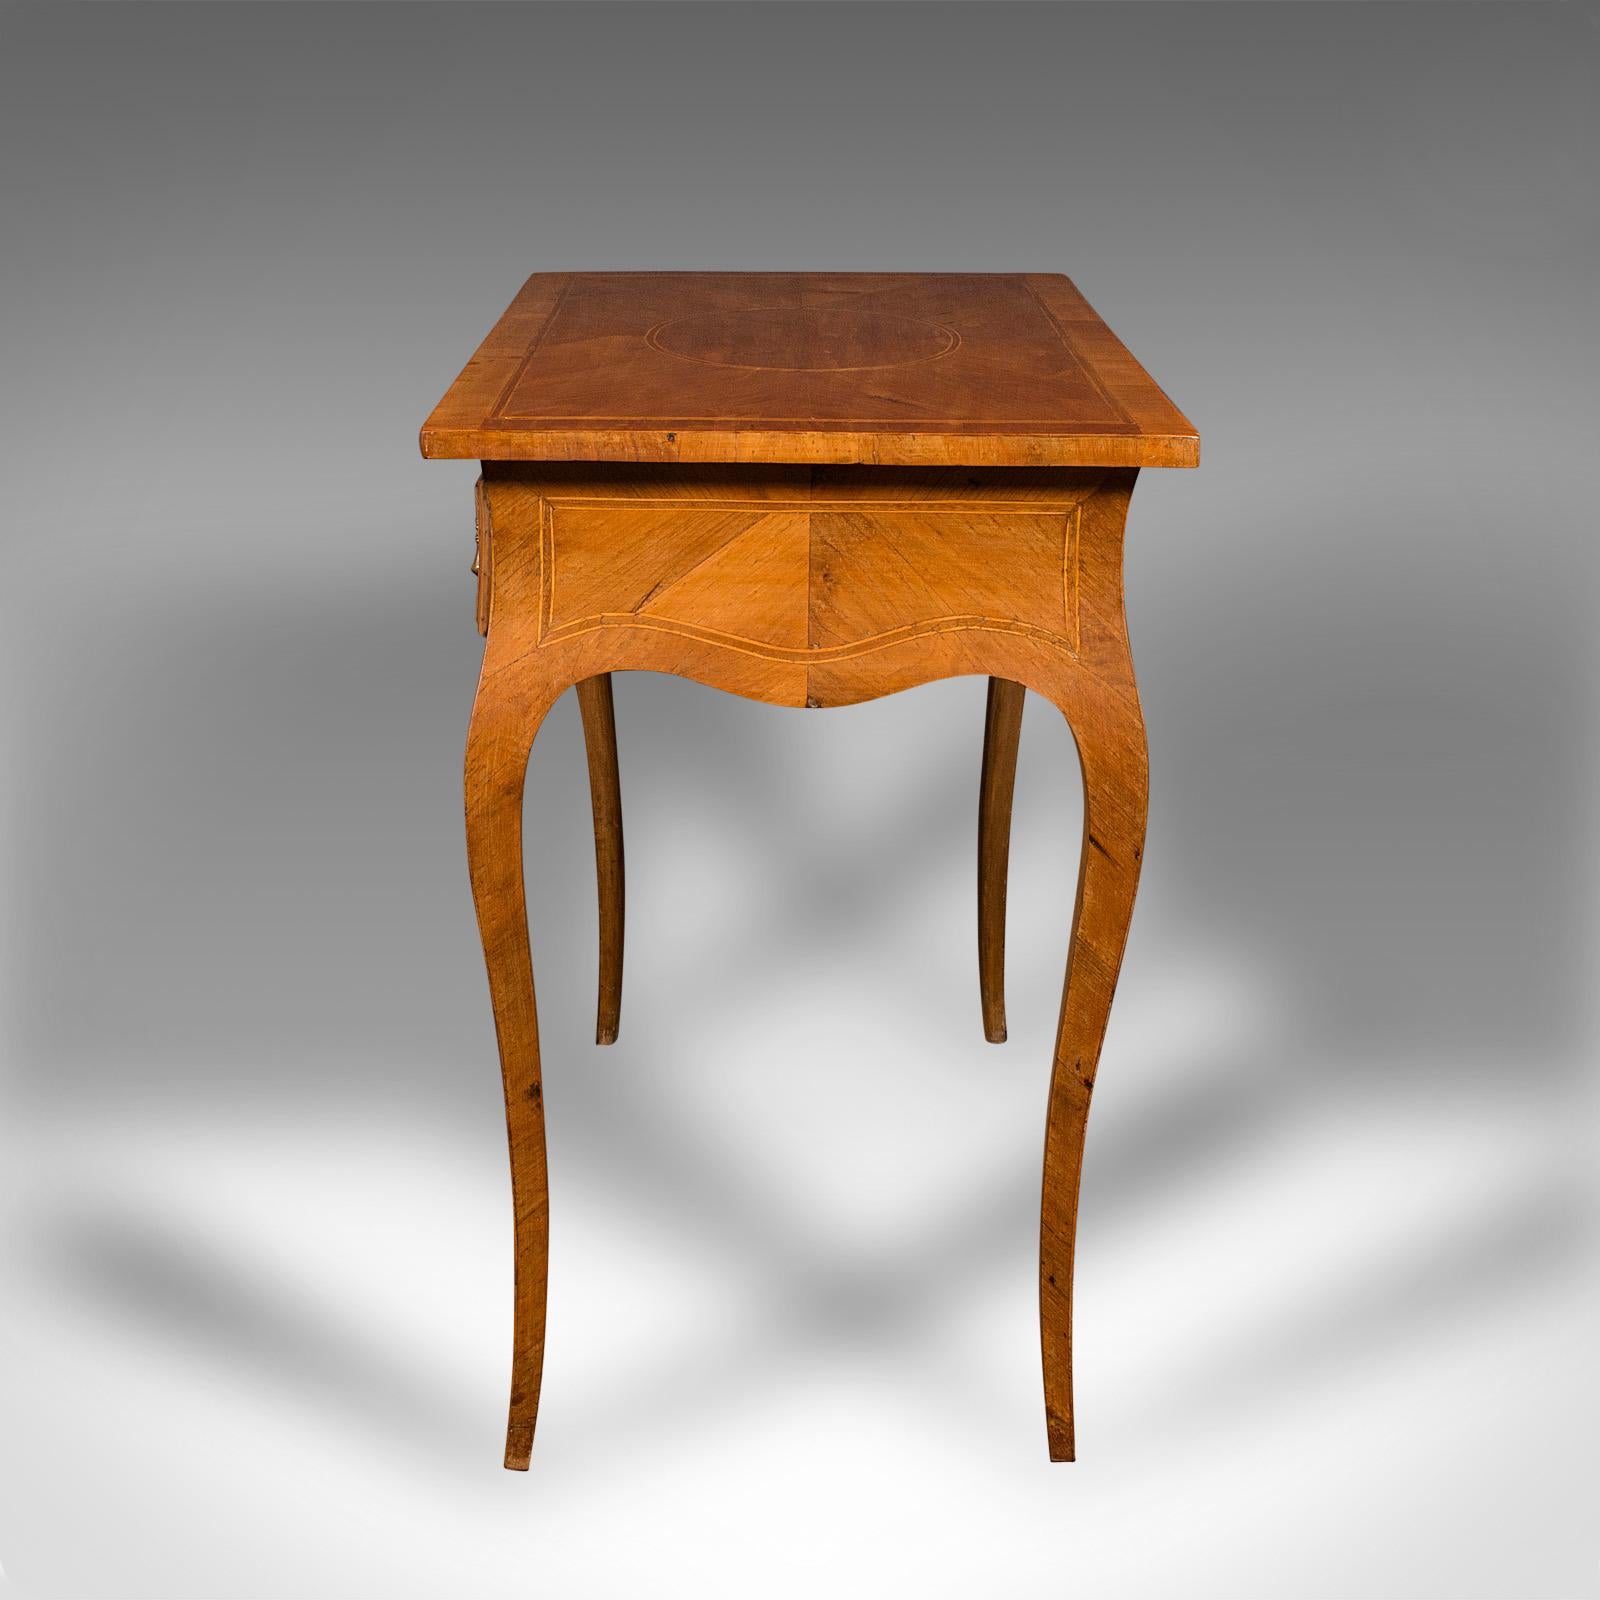 19th Century Antique Bureau Plat, French, Walnut, Writing Desk, Louis XV Revival, Victorian For Sale